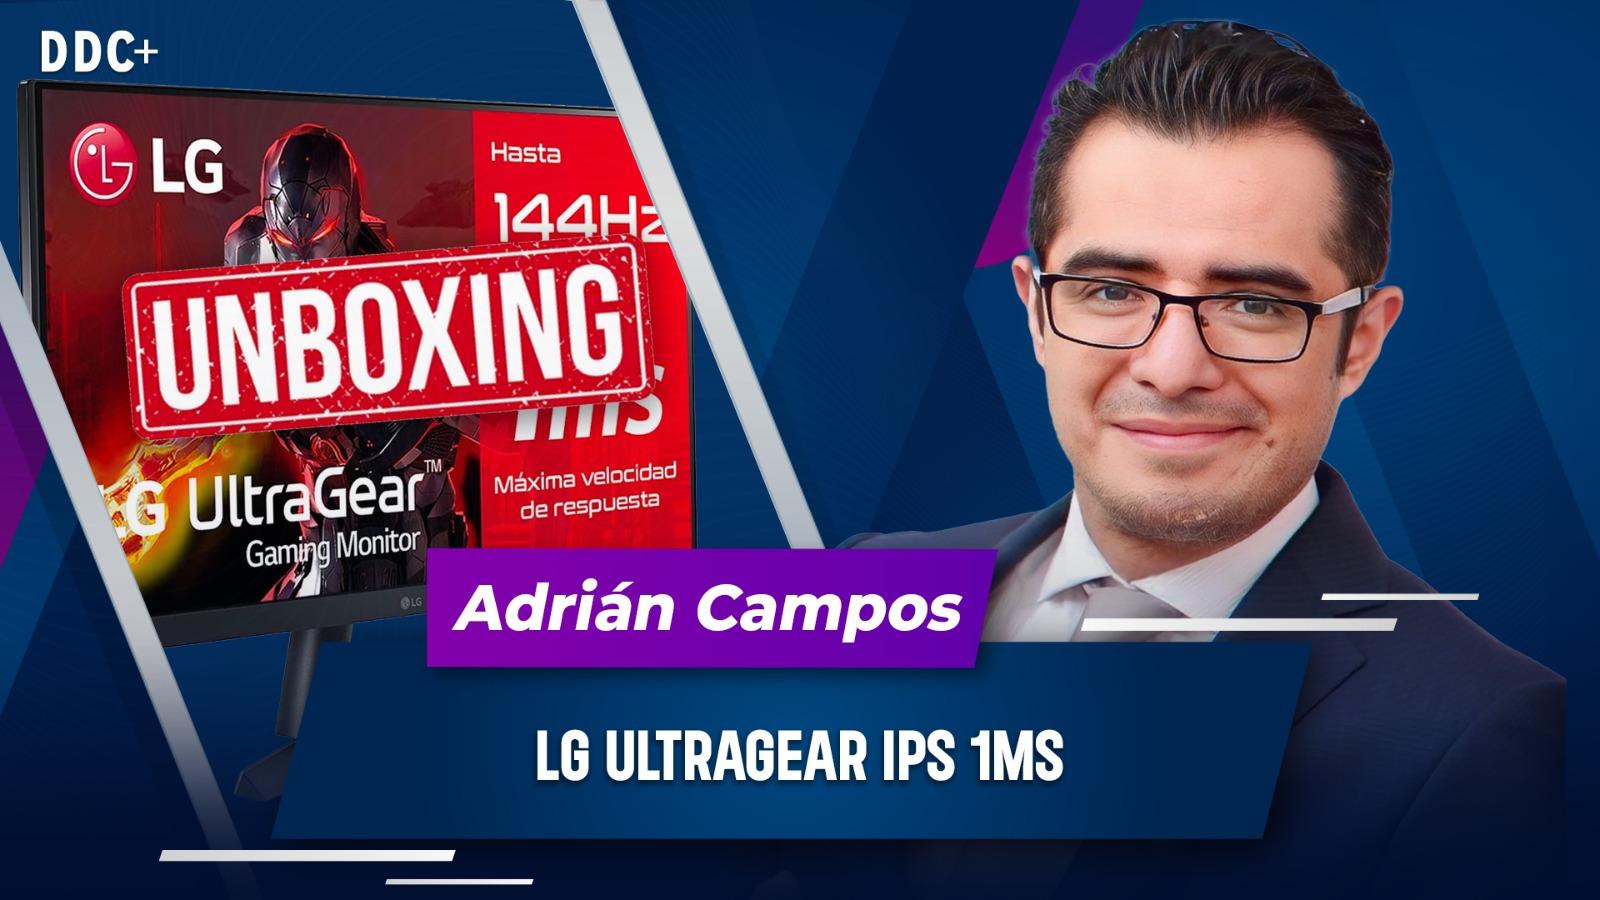 LG Adrián Campos unboxing